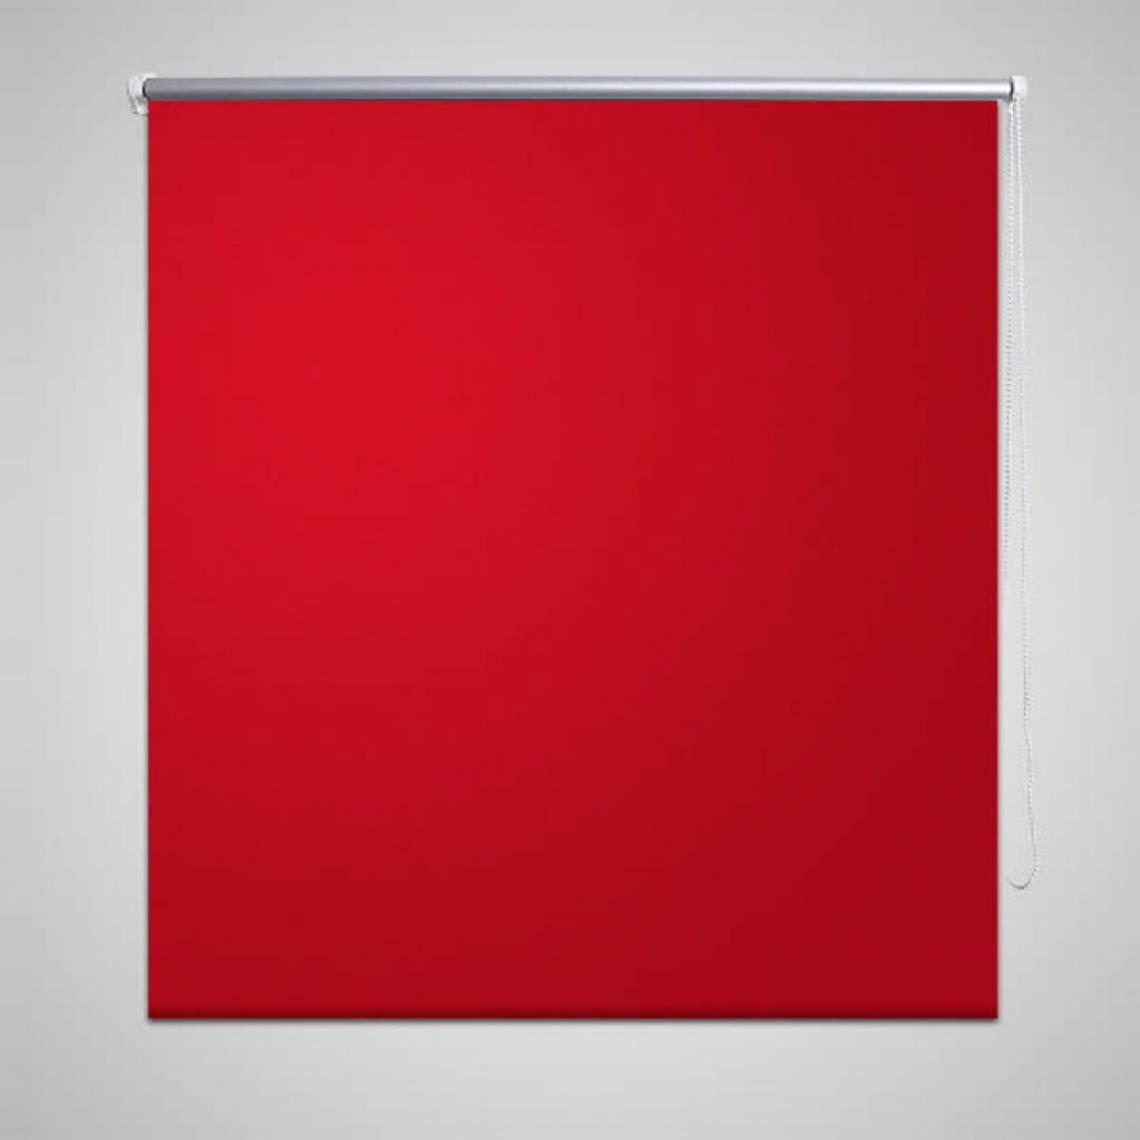 Hucoco - Store enrouleur occultant 160 x 175 cm rouge - Rouge - Store compatible Velux